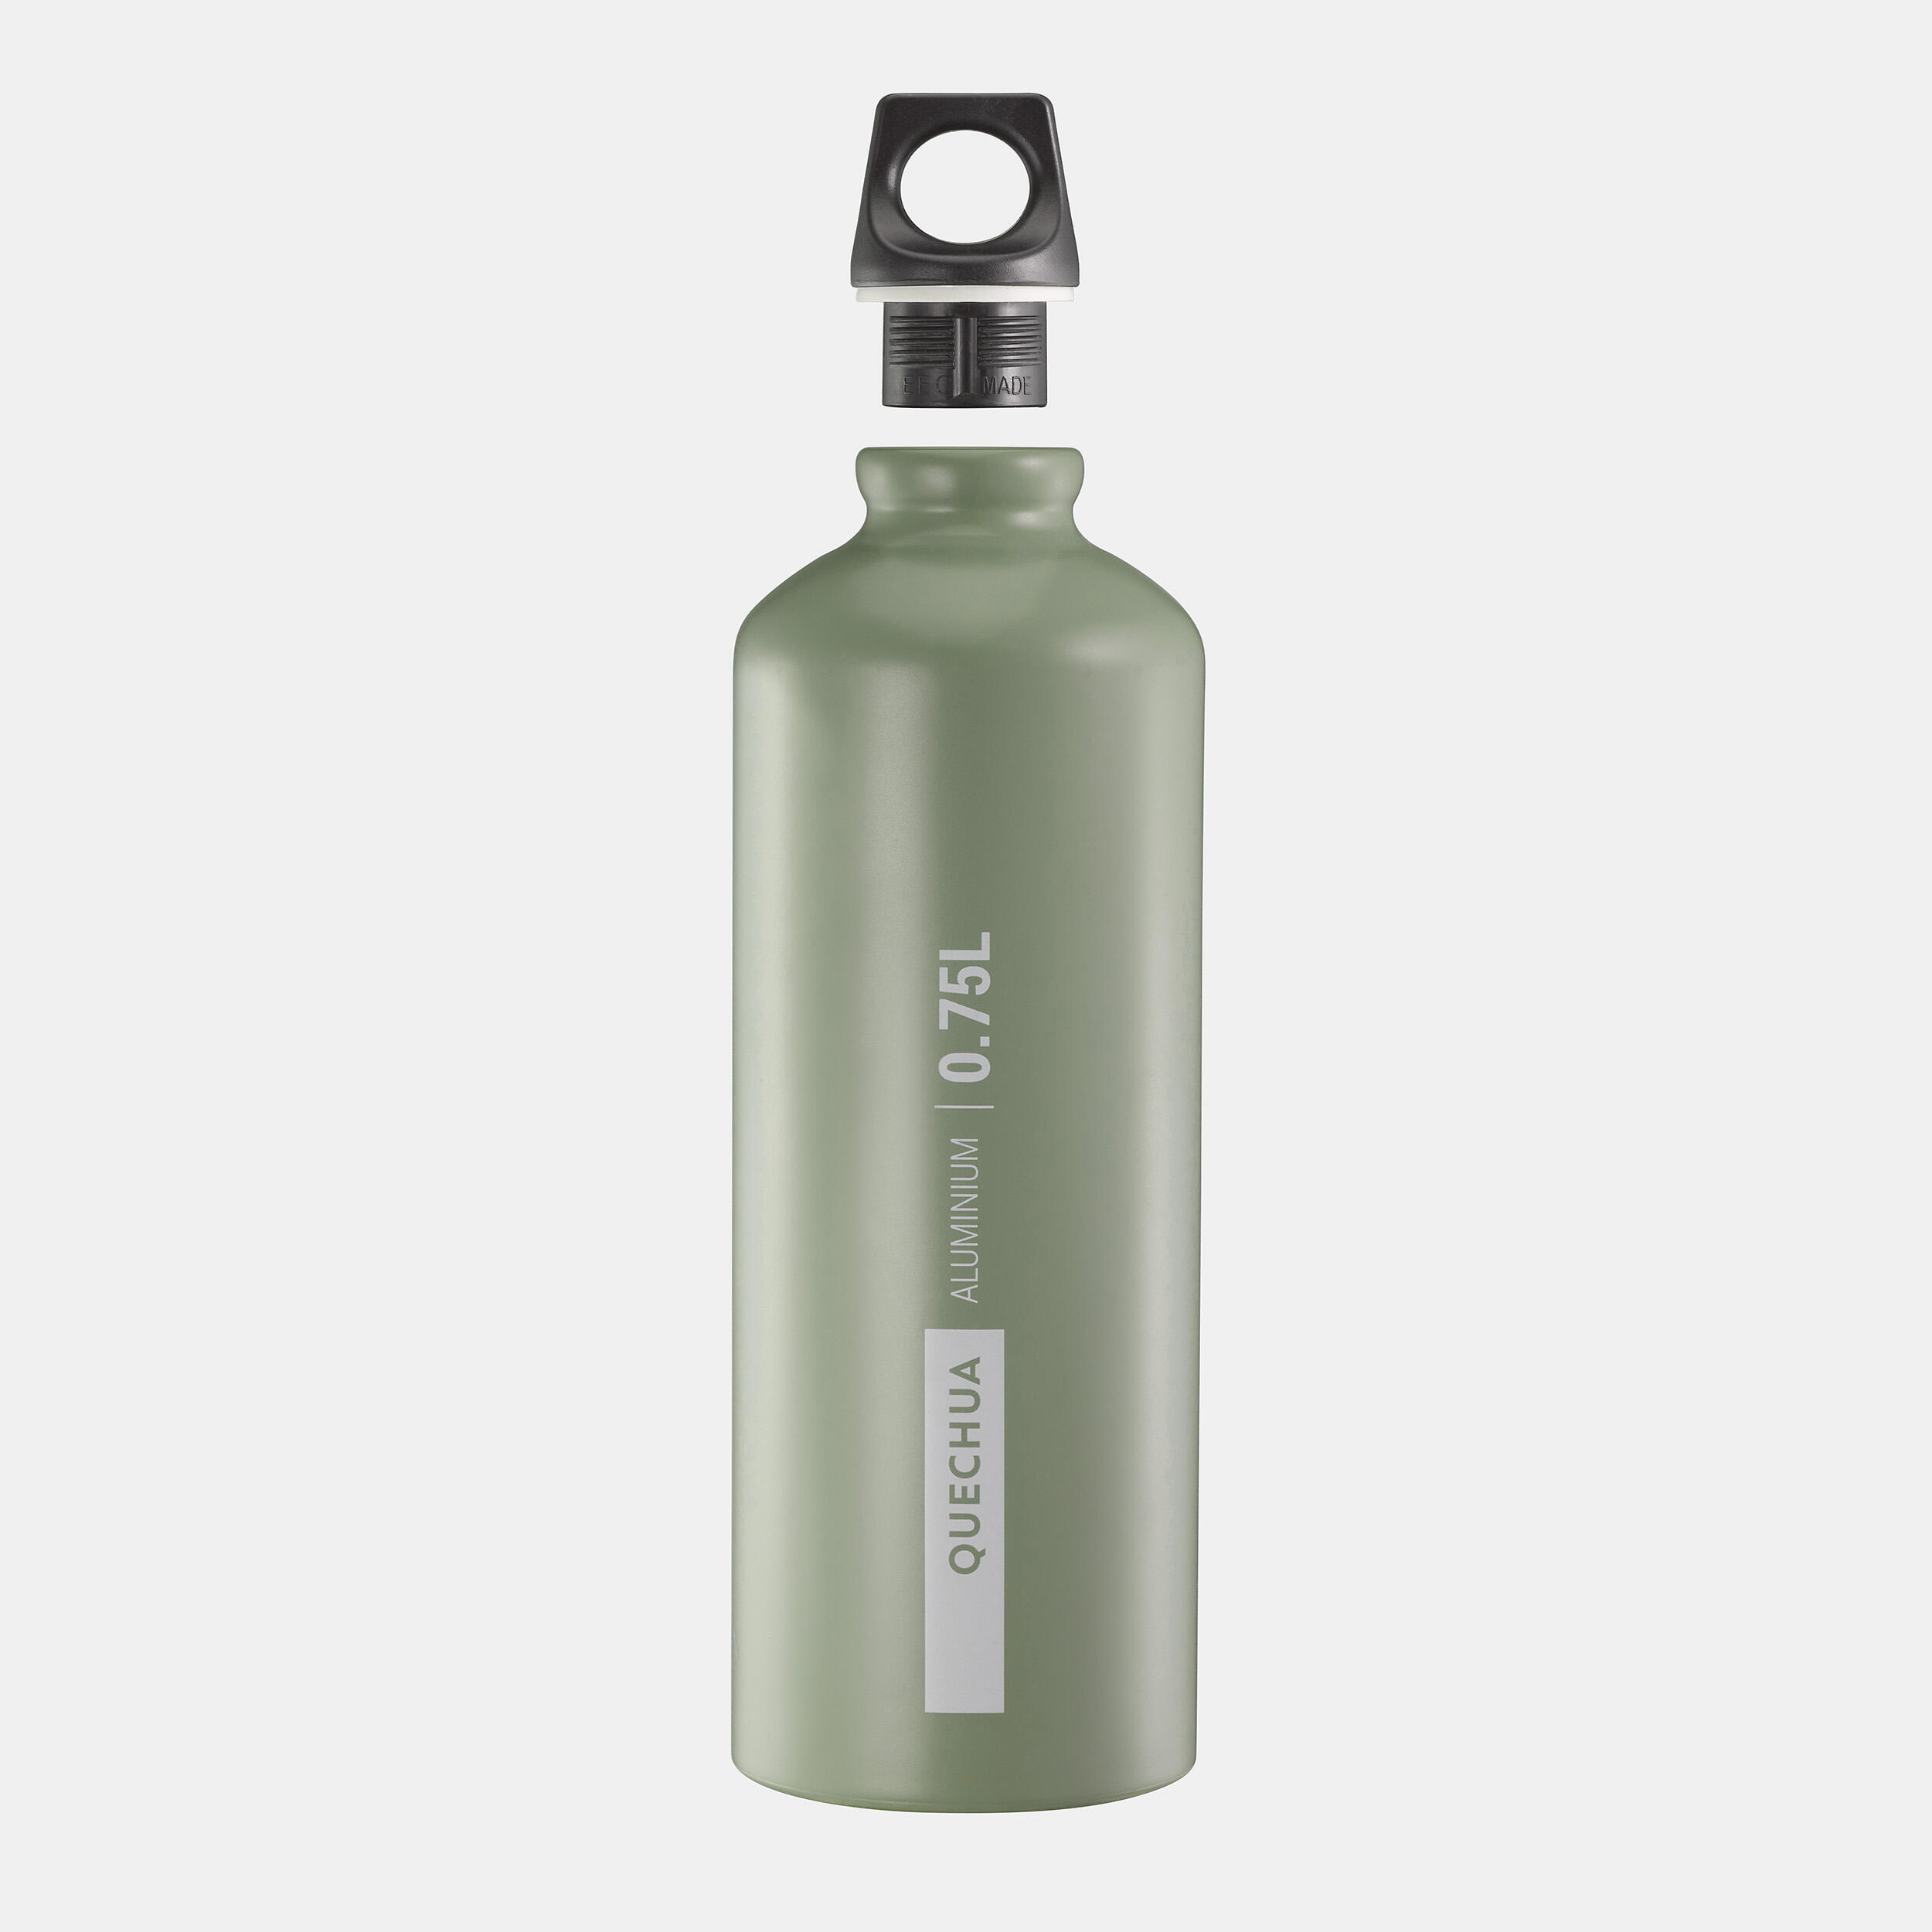 Aluminium Flask 0.75 L with Screw Cap for Hiking 2/6